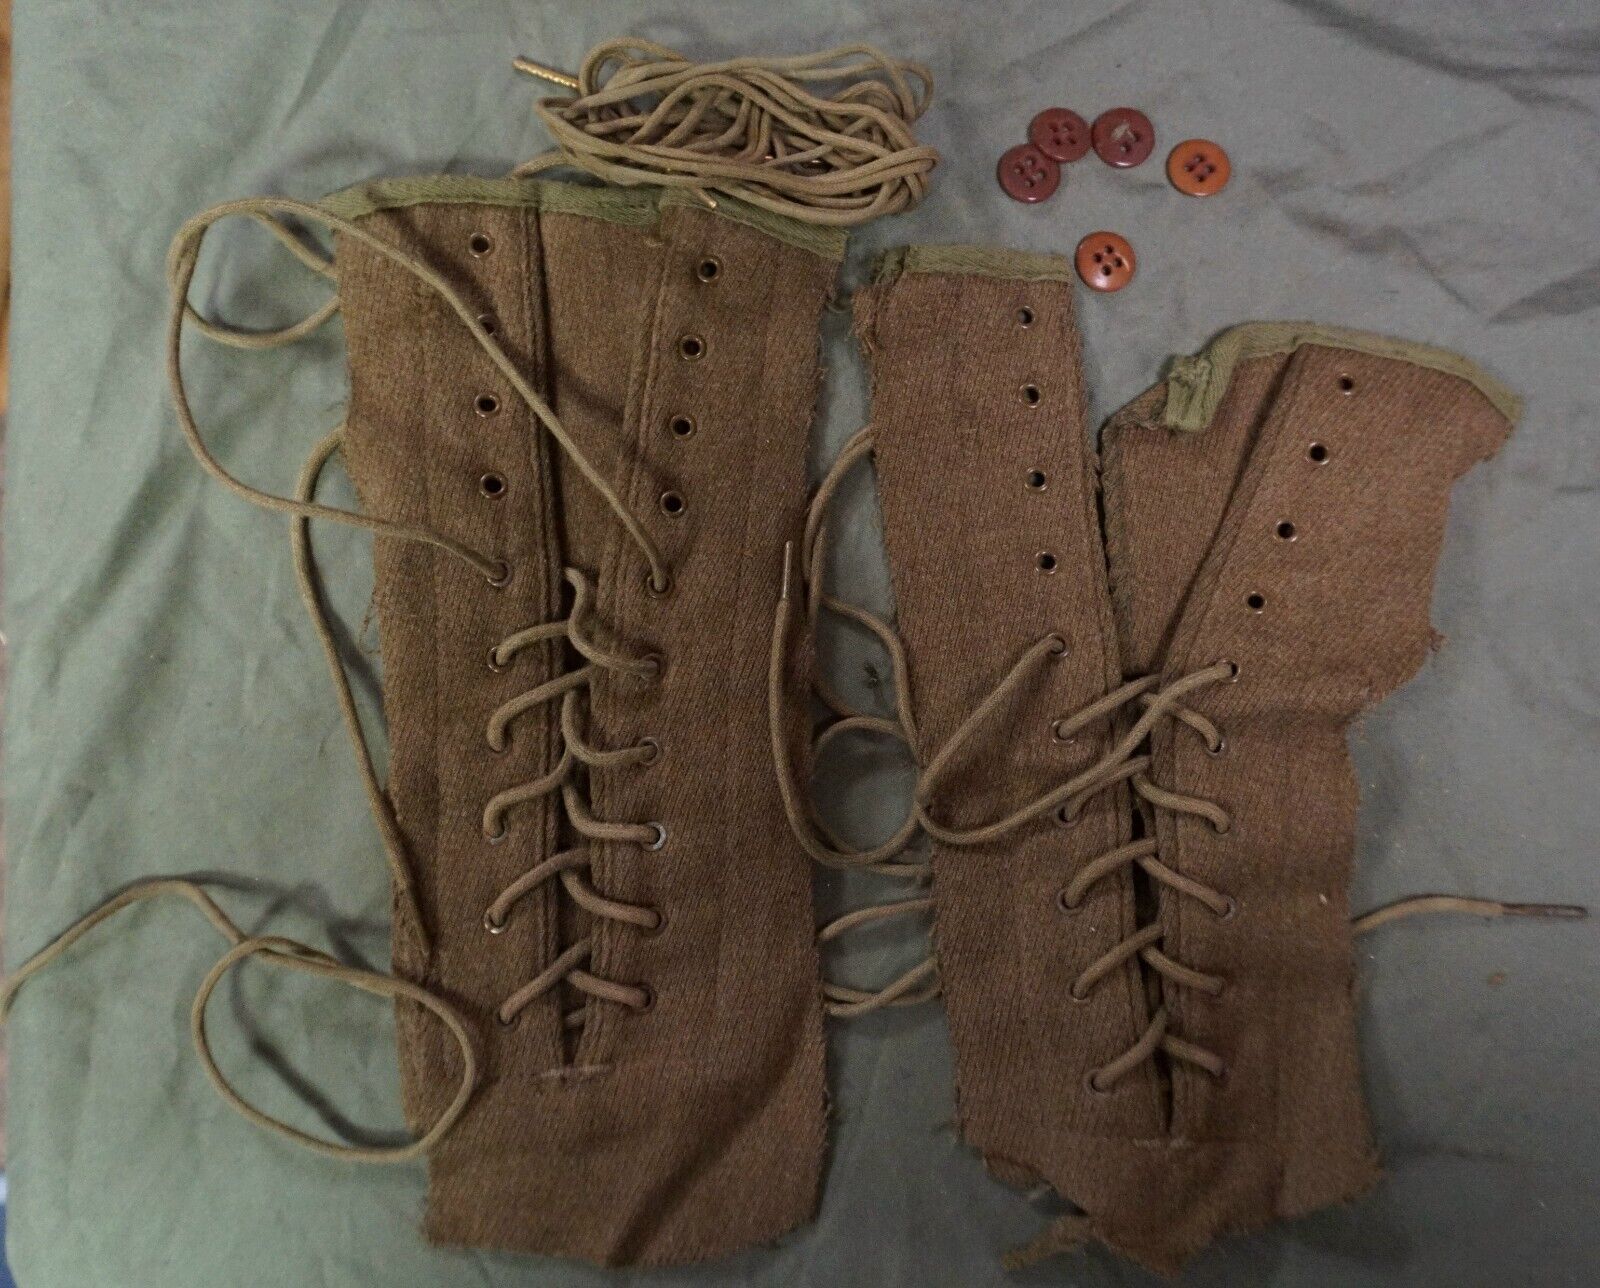 Original WWI U.S. Army pair wool leggings (Loc box bottom of rack)